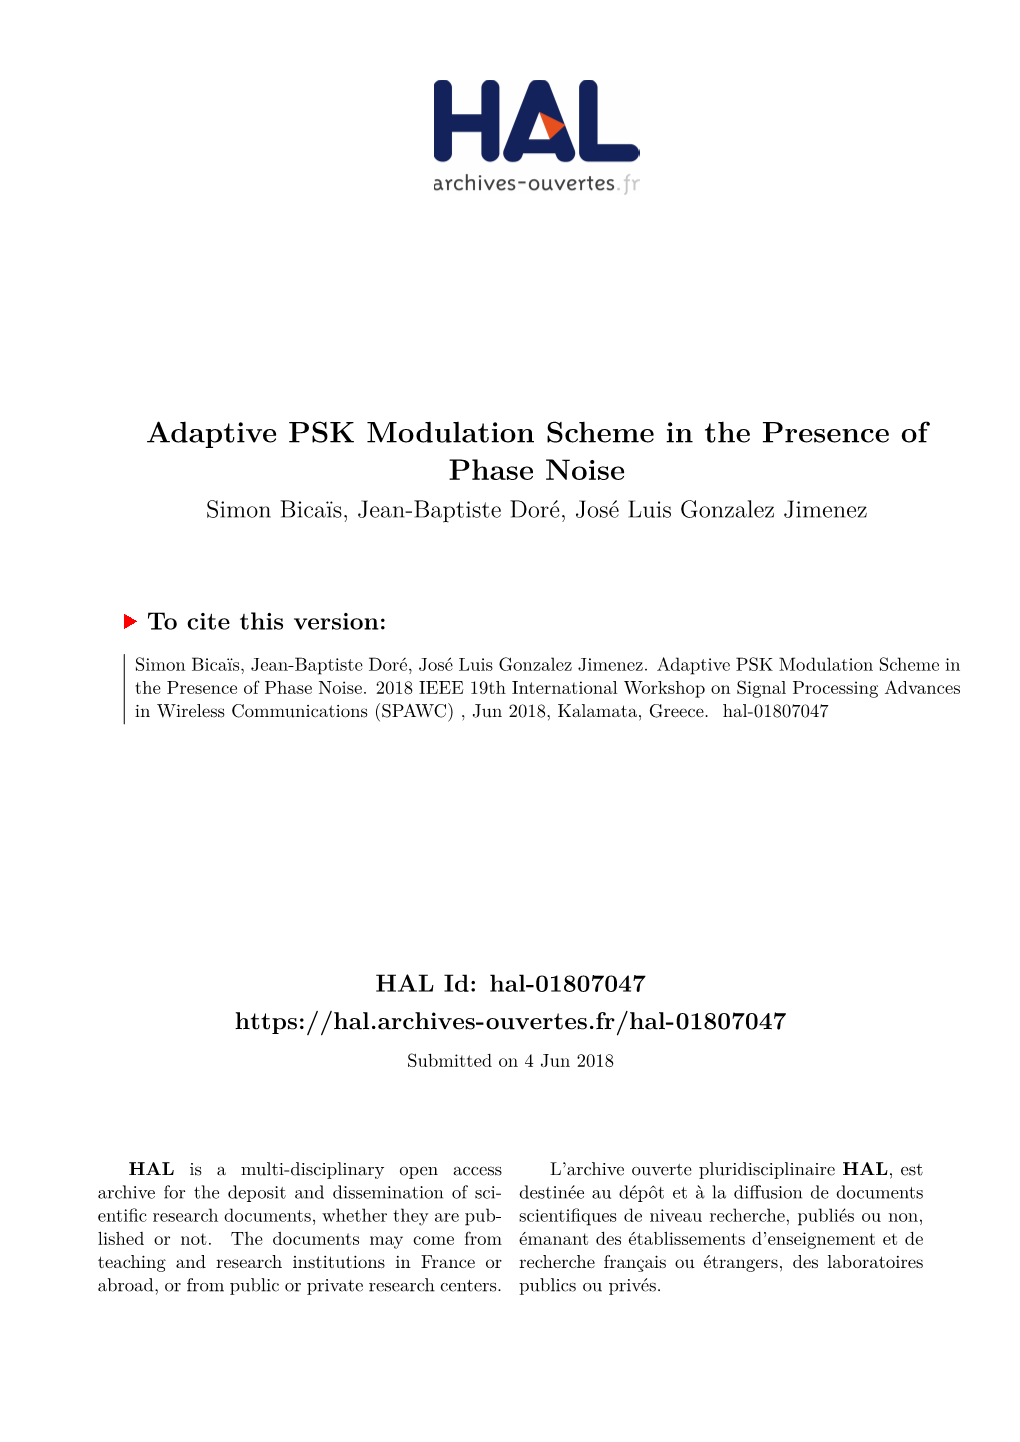 Adaptive PSK Modulation Scheme in the Presence of Phase Noise Simon Bicaïs, Jean-Baptiste Doré, José Luis Gonzalez Jimenez